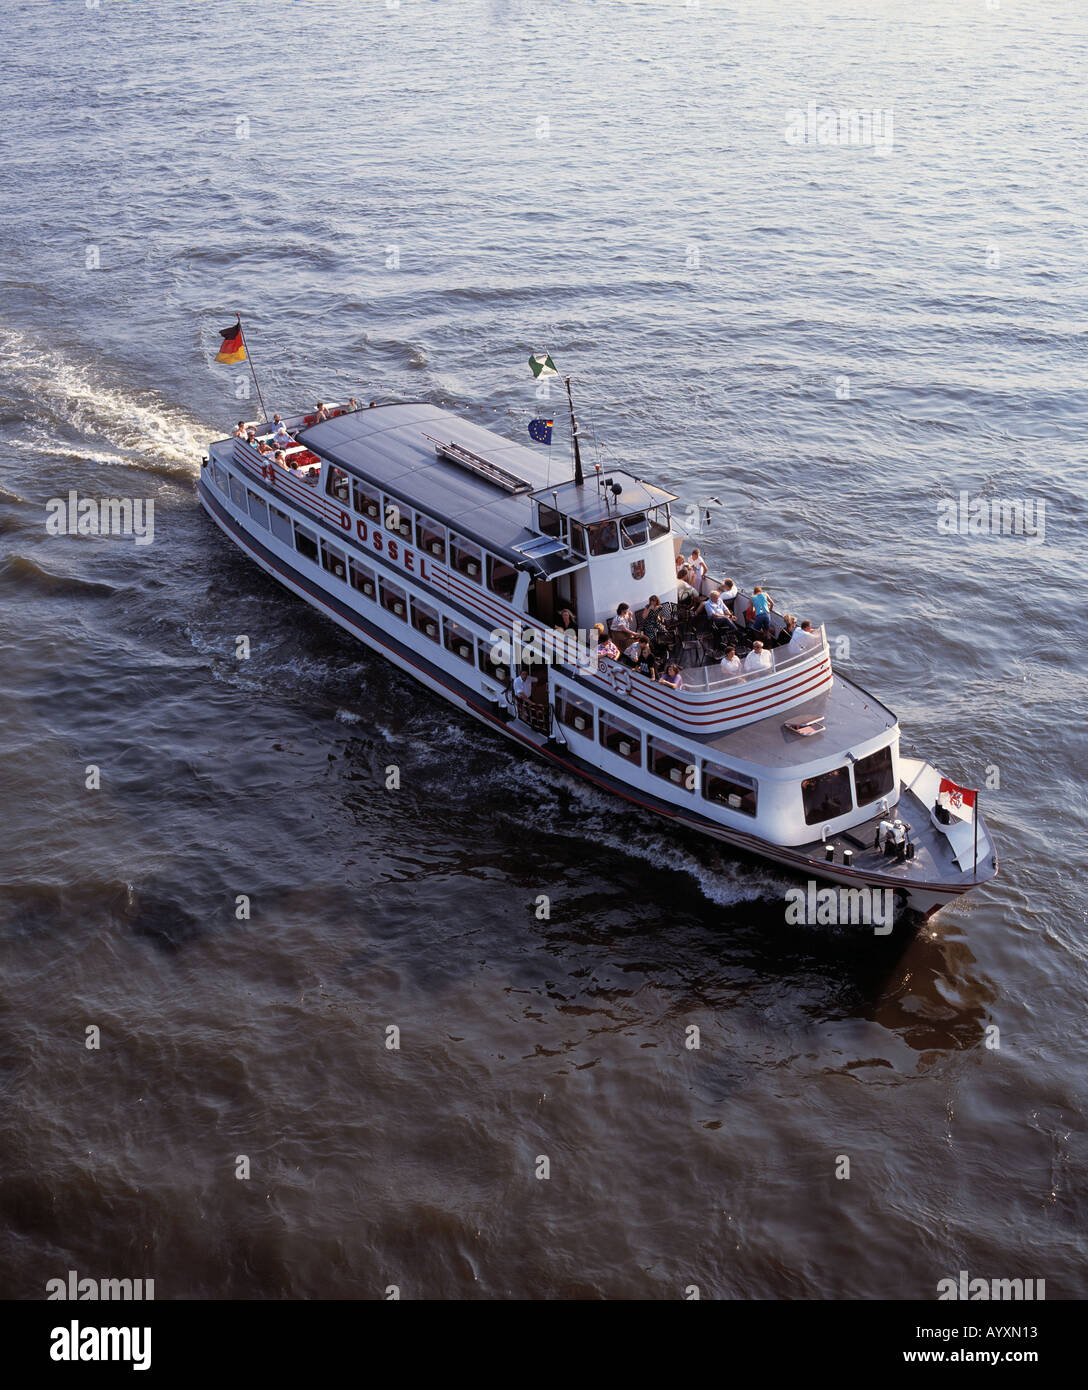 https://c8.alamy.com/comp/AYXN13/excursion-boat-excursion-ship-tourist-steamer-pleasure-steamer-transport-AYXN13.jpg